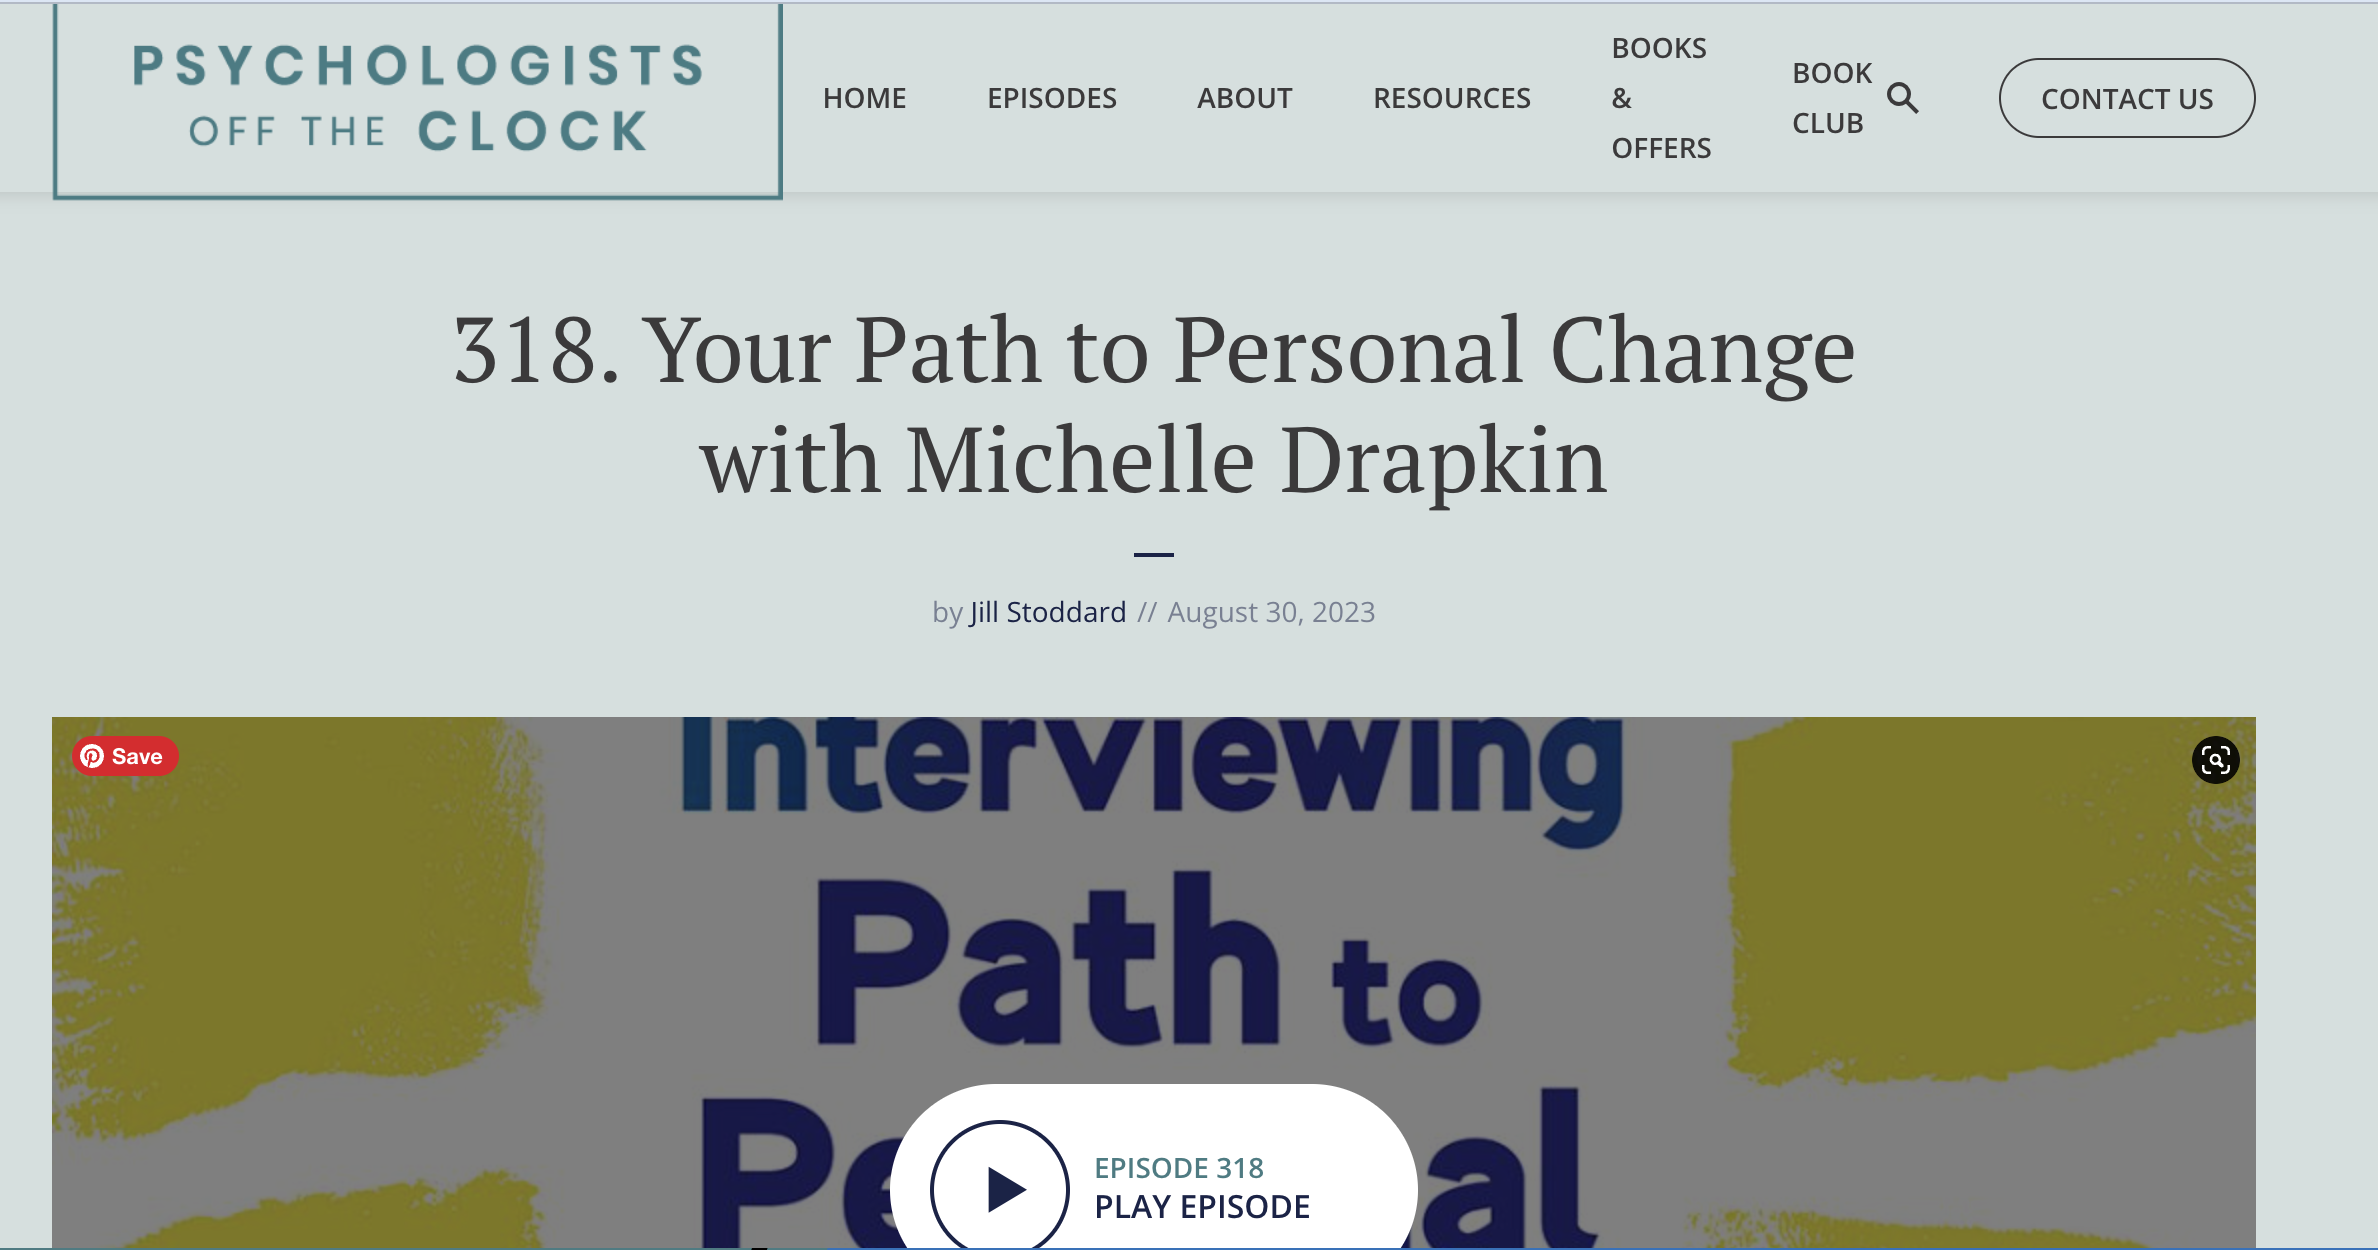 Listen to Dr. Drapkin on Psychologists off the Clock (**Podcast alert**)